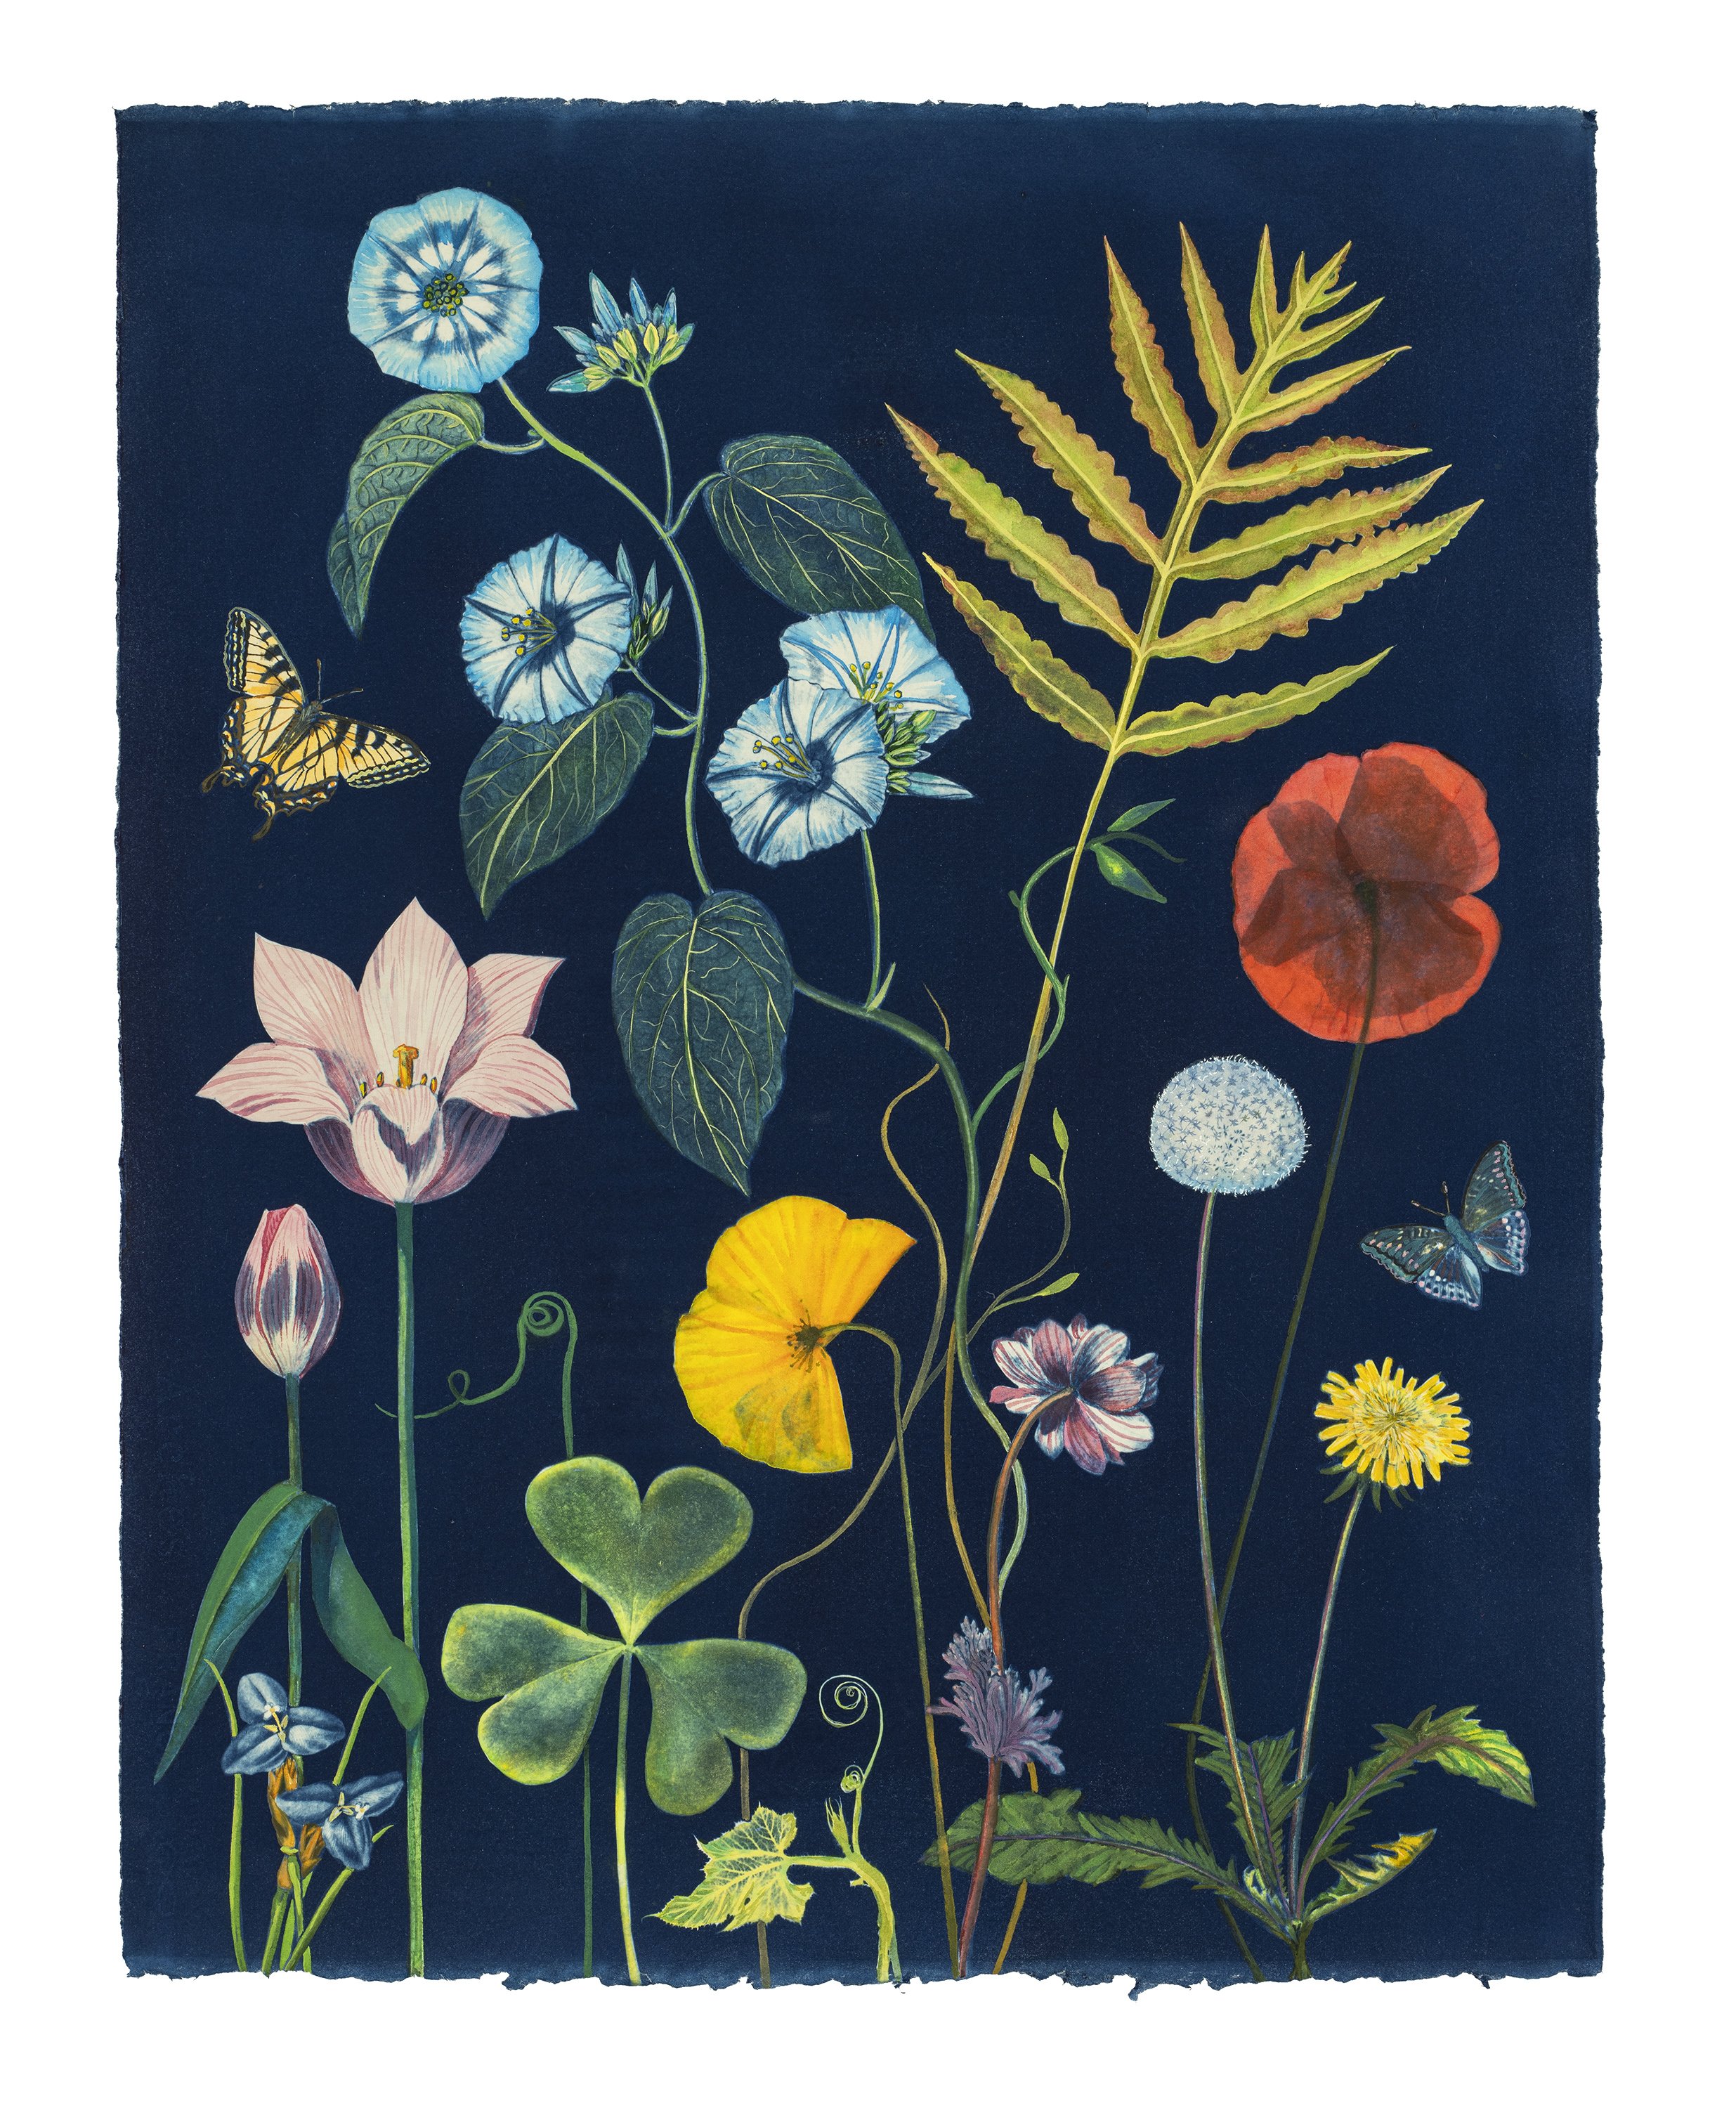 Picturesque Botany (Morning Glory, Poppy, Dandelion, Tulip, Fern, Crocus, Pollinators, etc)